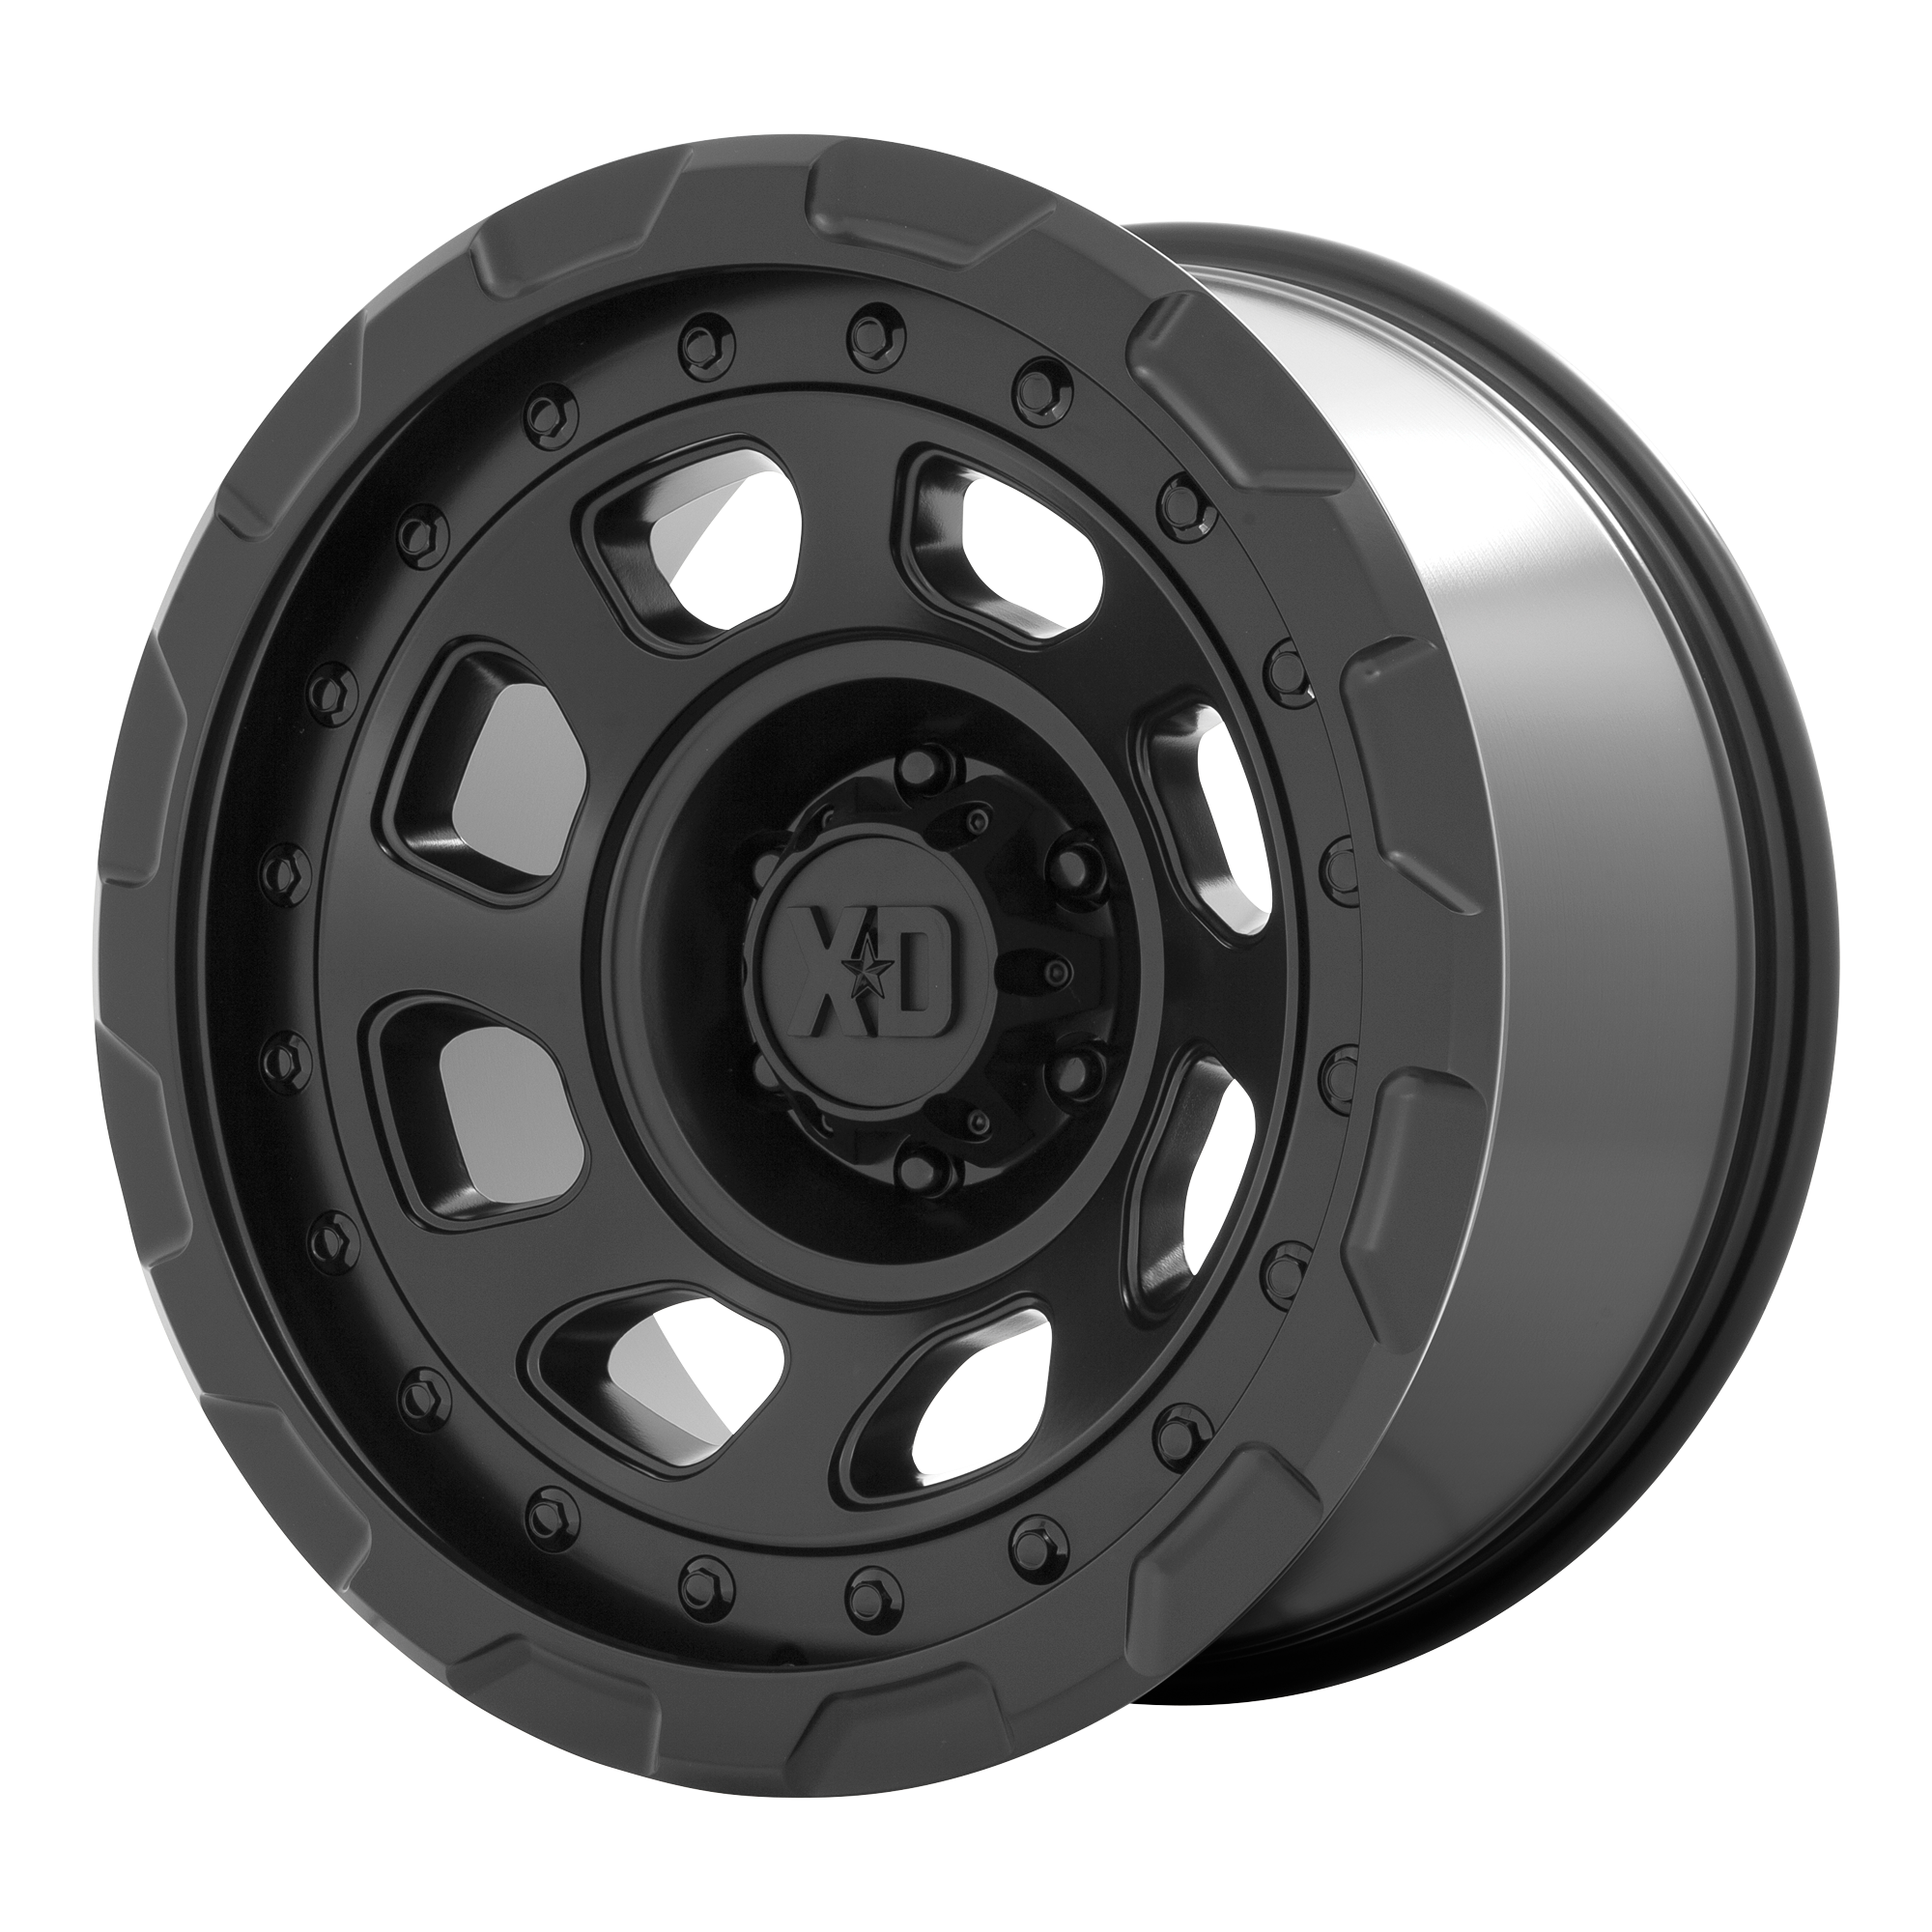 XD 20"x10" Non-Chrome Satin Black Custom Wheel ARSWCWXD86121050718N